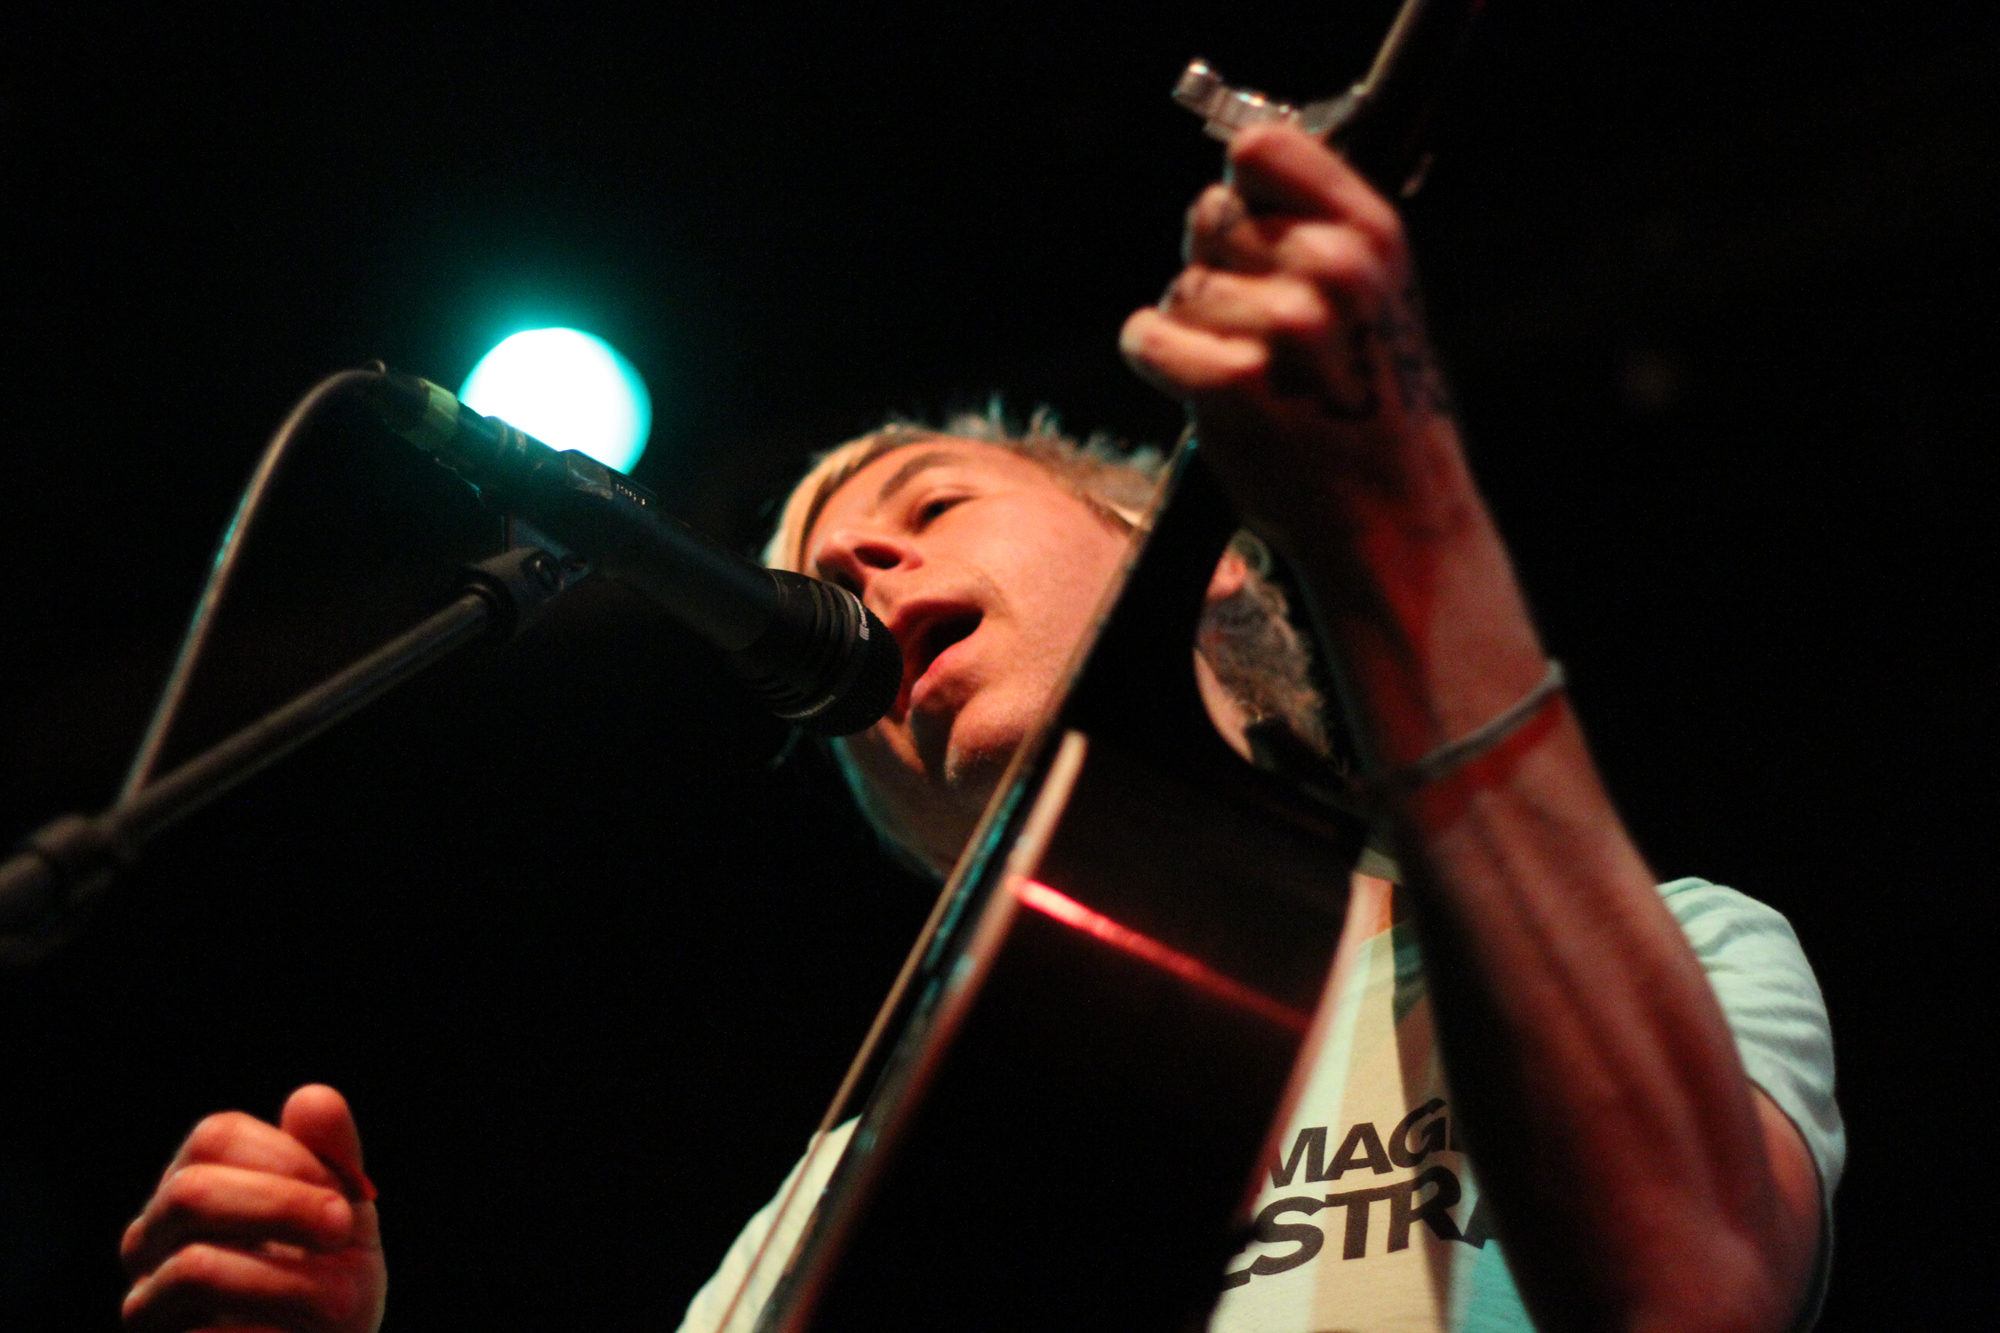 John Vanderslice performs at Black Cat Backstage in Washington, D.C. on May 18, 2011.